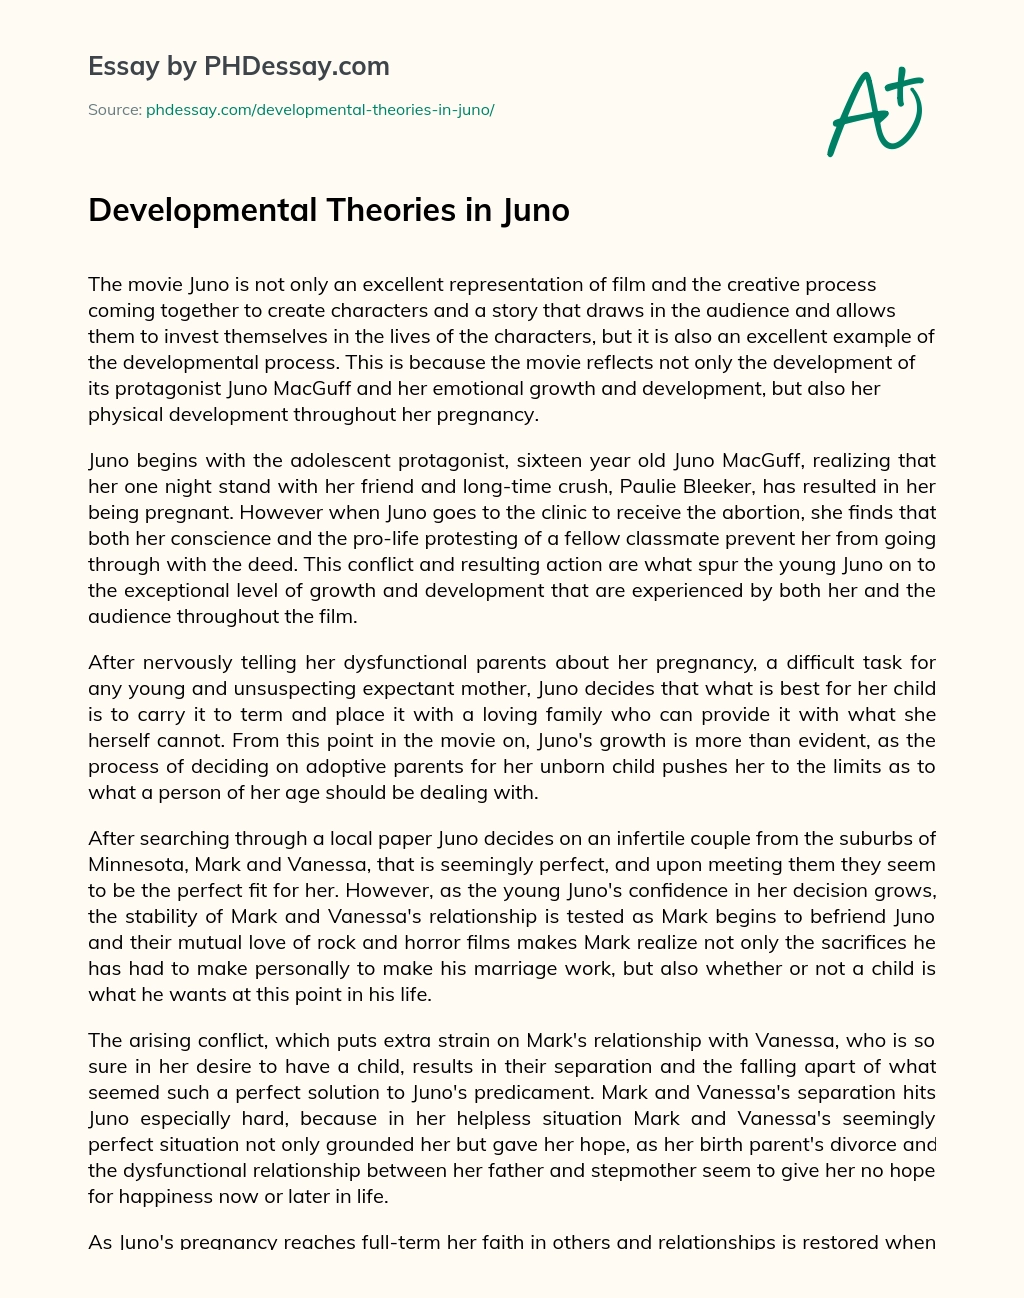 Developmental Theories in Juno essay